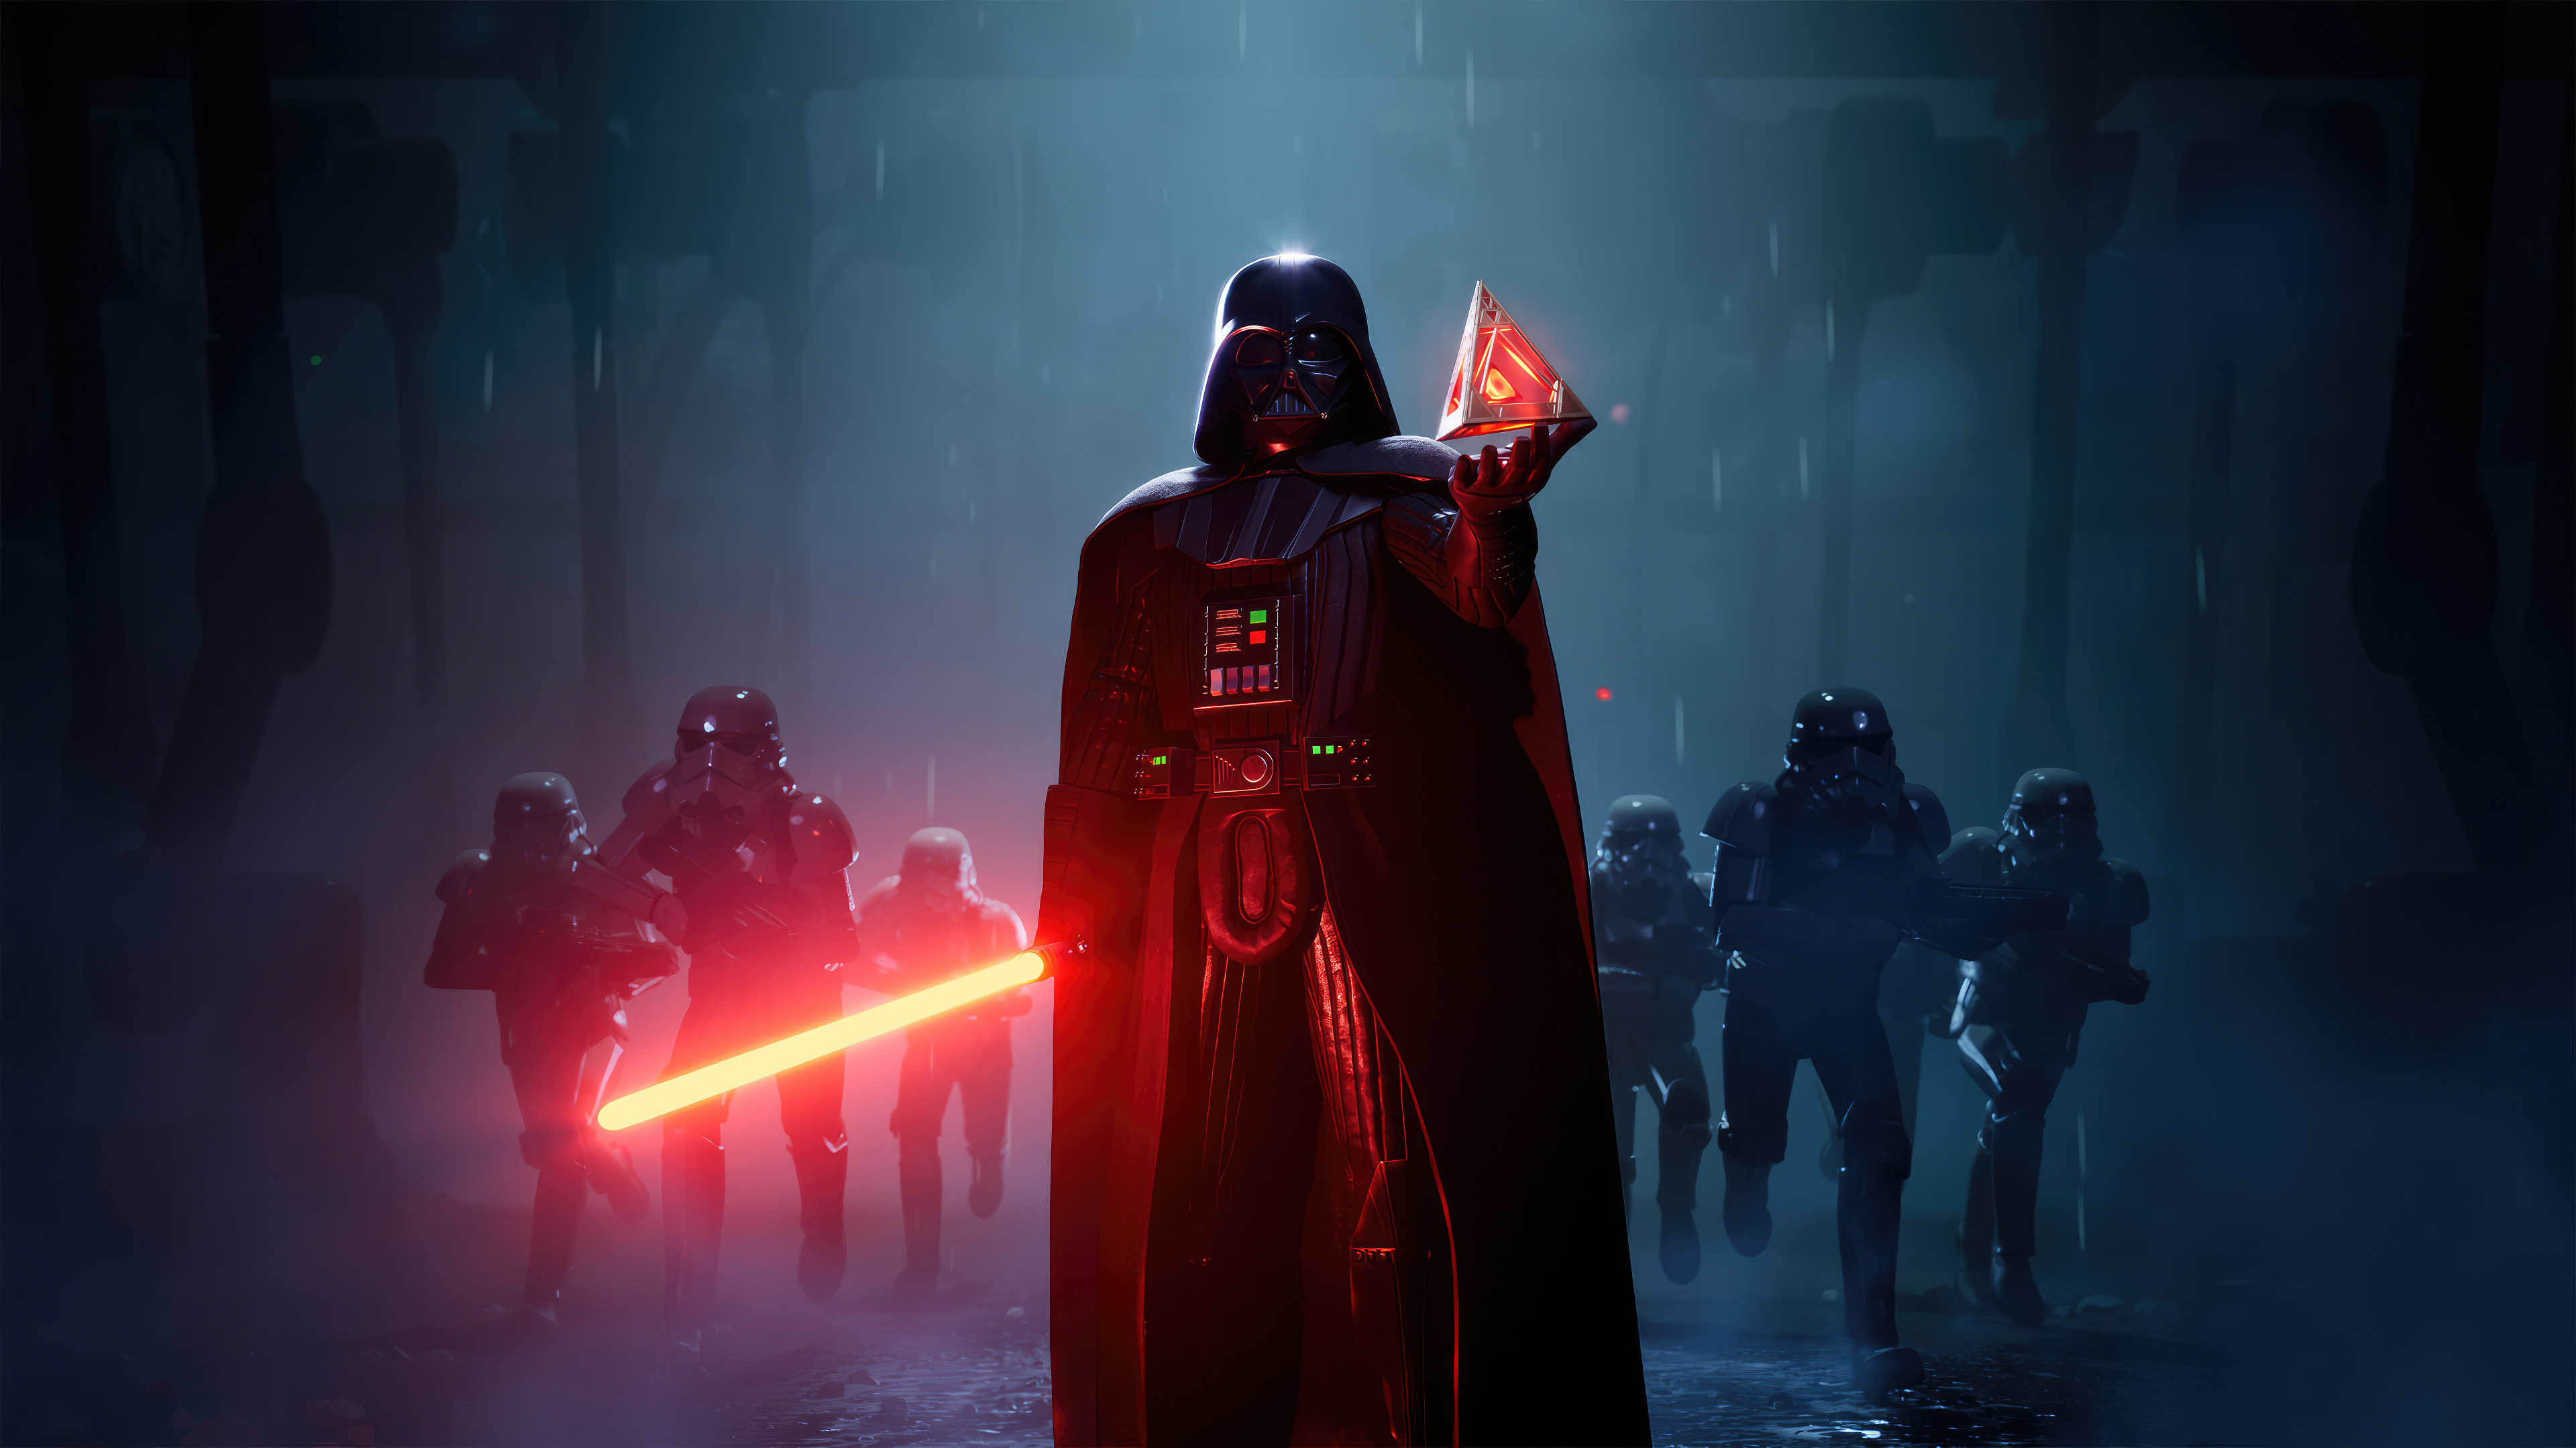 Darth Vader Star Wars Lightsaber Stormtrooper Imperial Stormtrooper E 11 Blaster Rifle Fortnite Anak 3840x2158